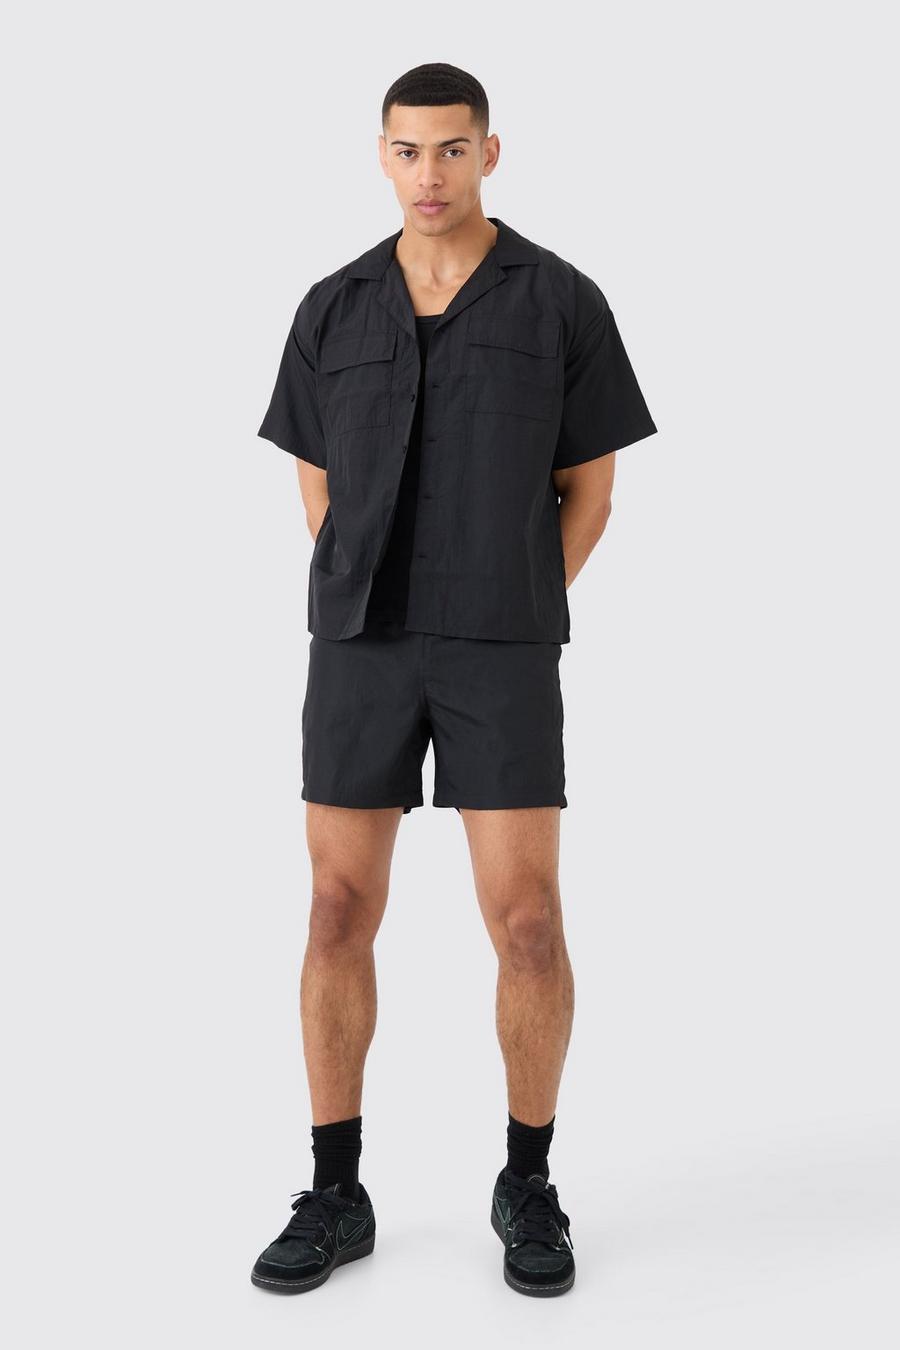 Black Crinkle Nylon Pocket Shirt & Short Set